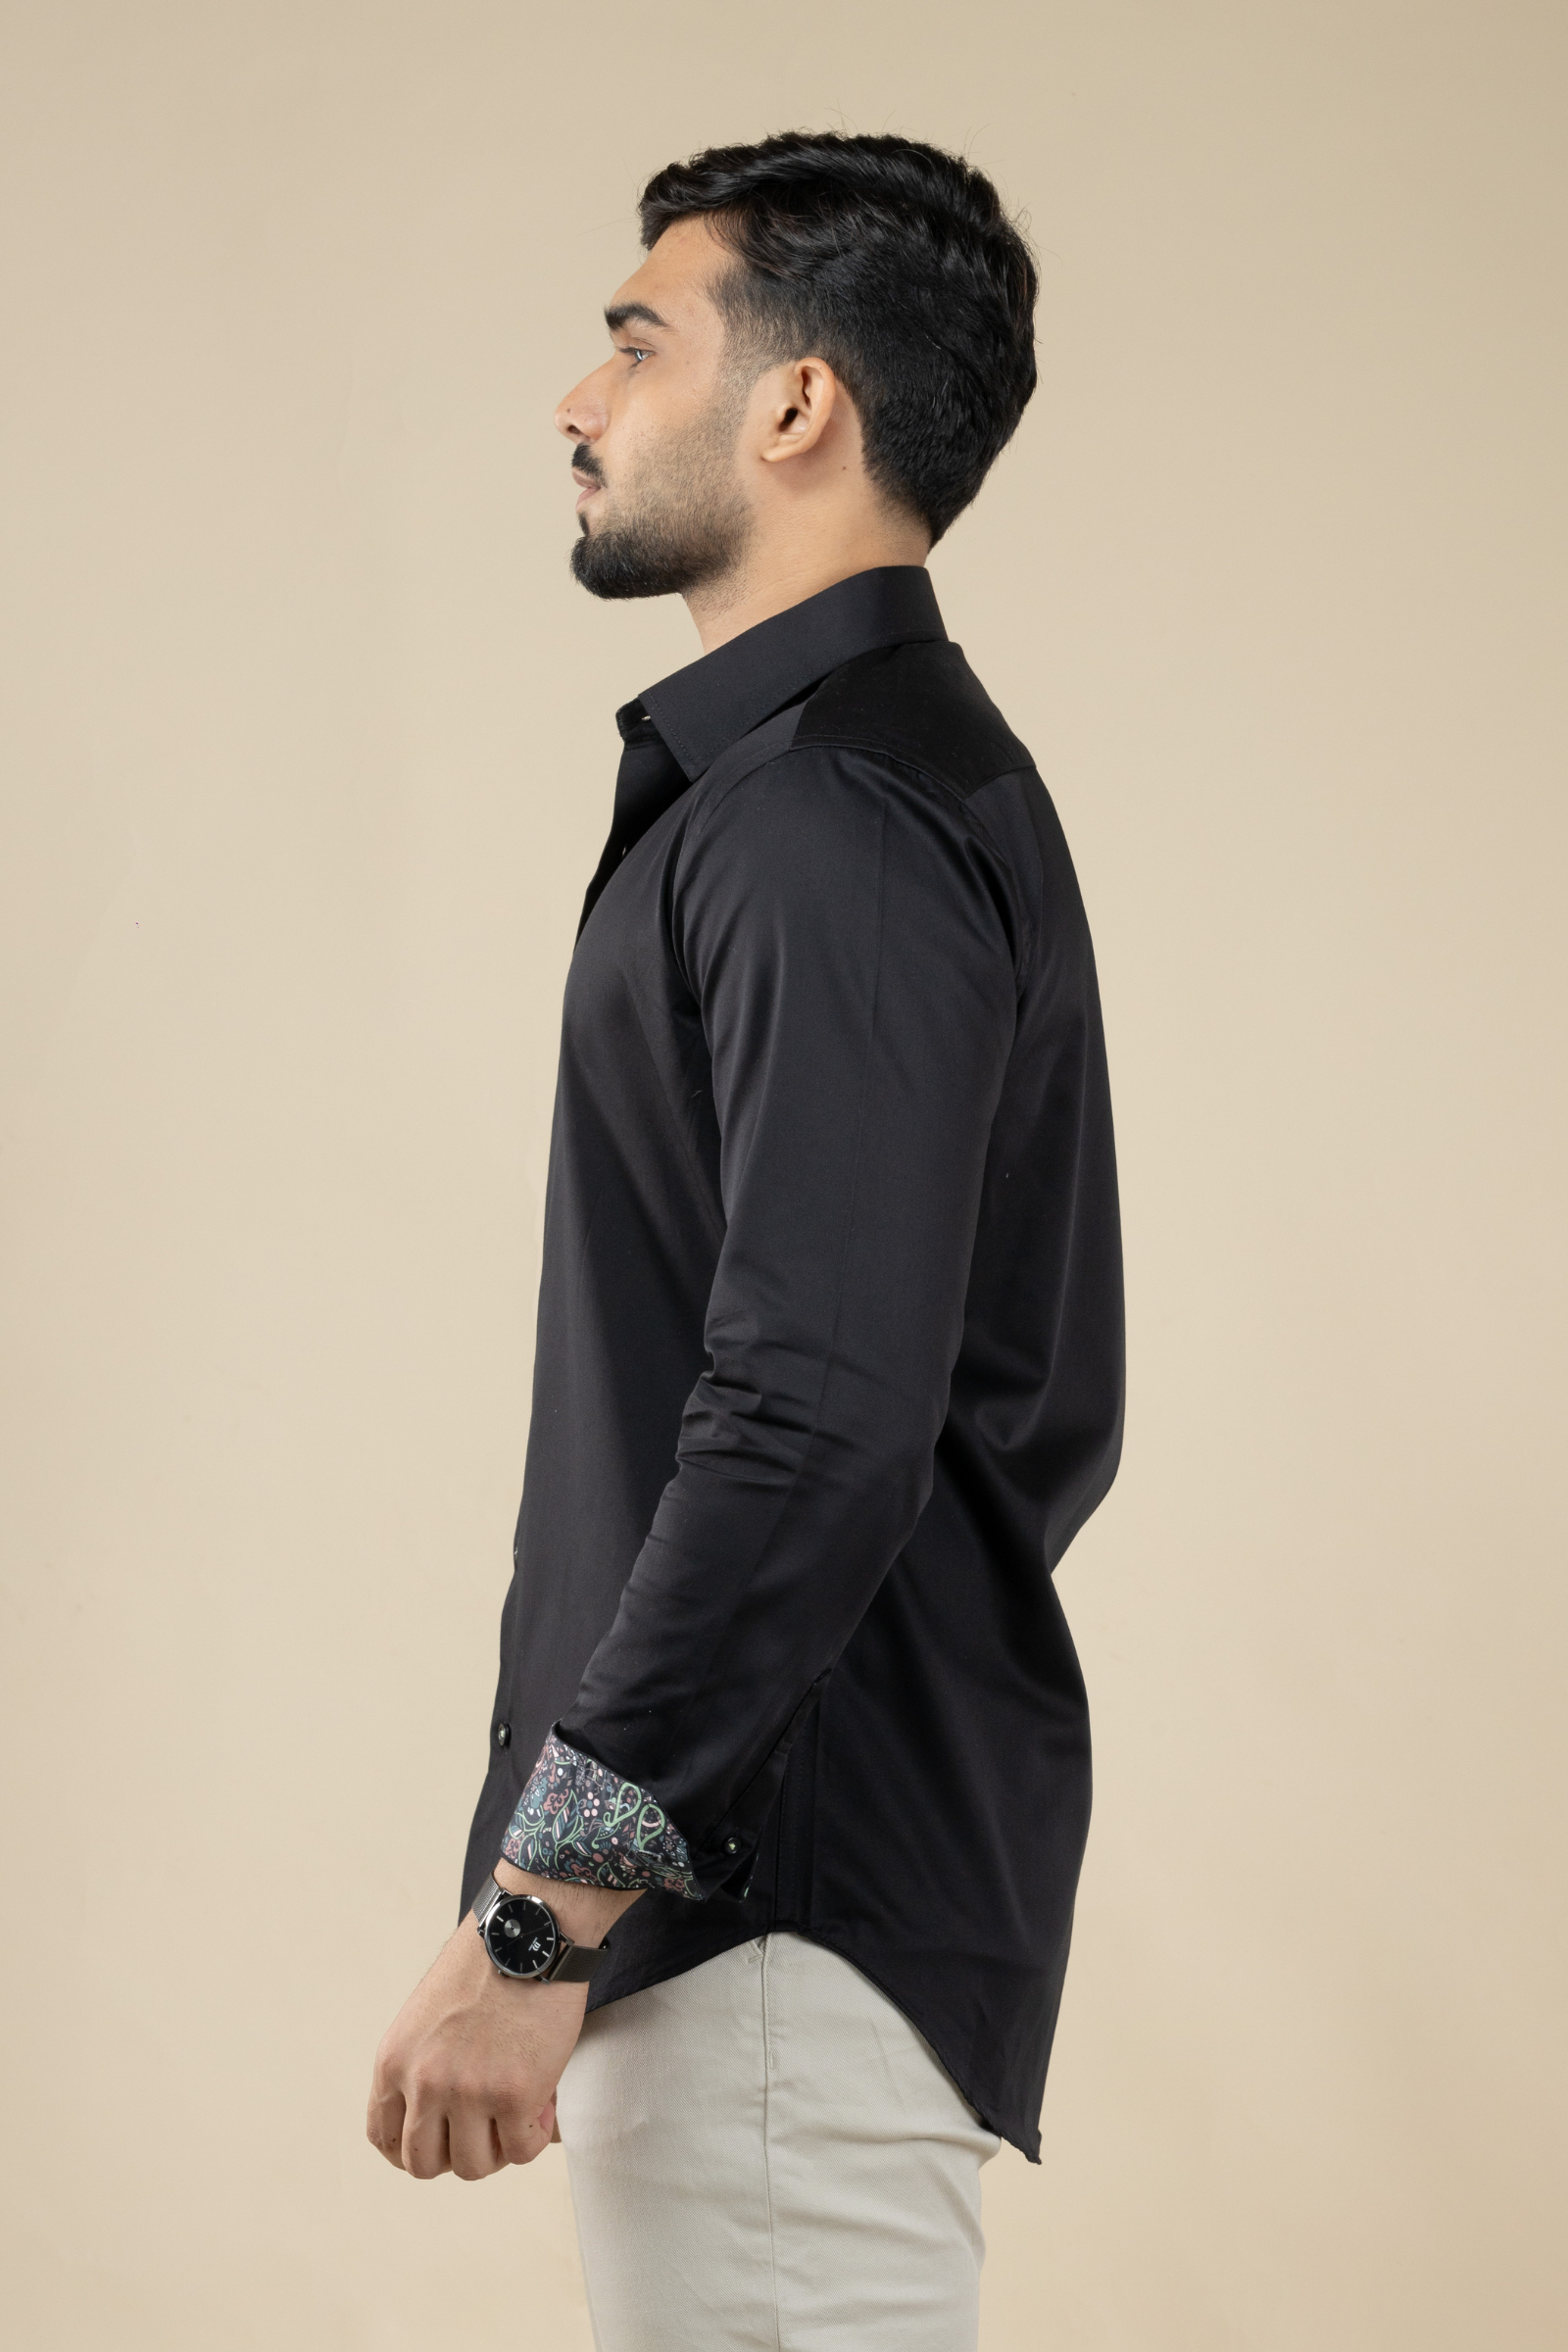 Black Satin Shirt with Inner Collar Cuff Contrast